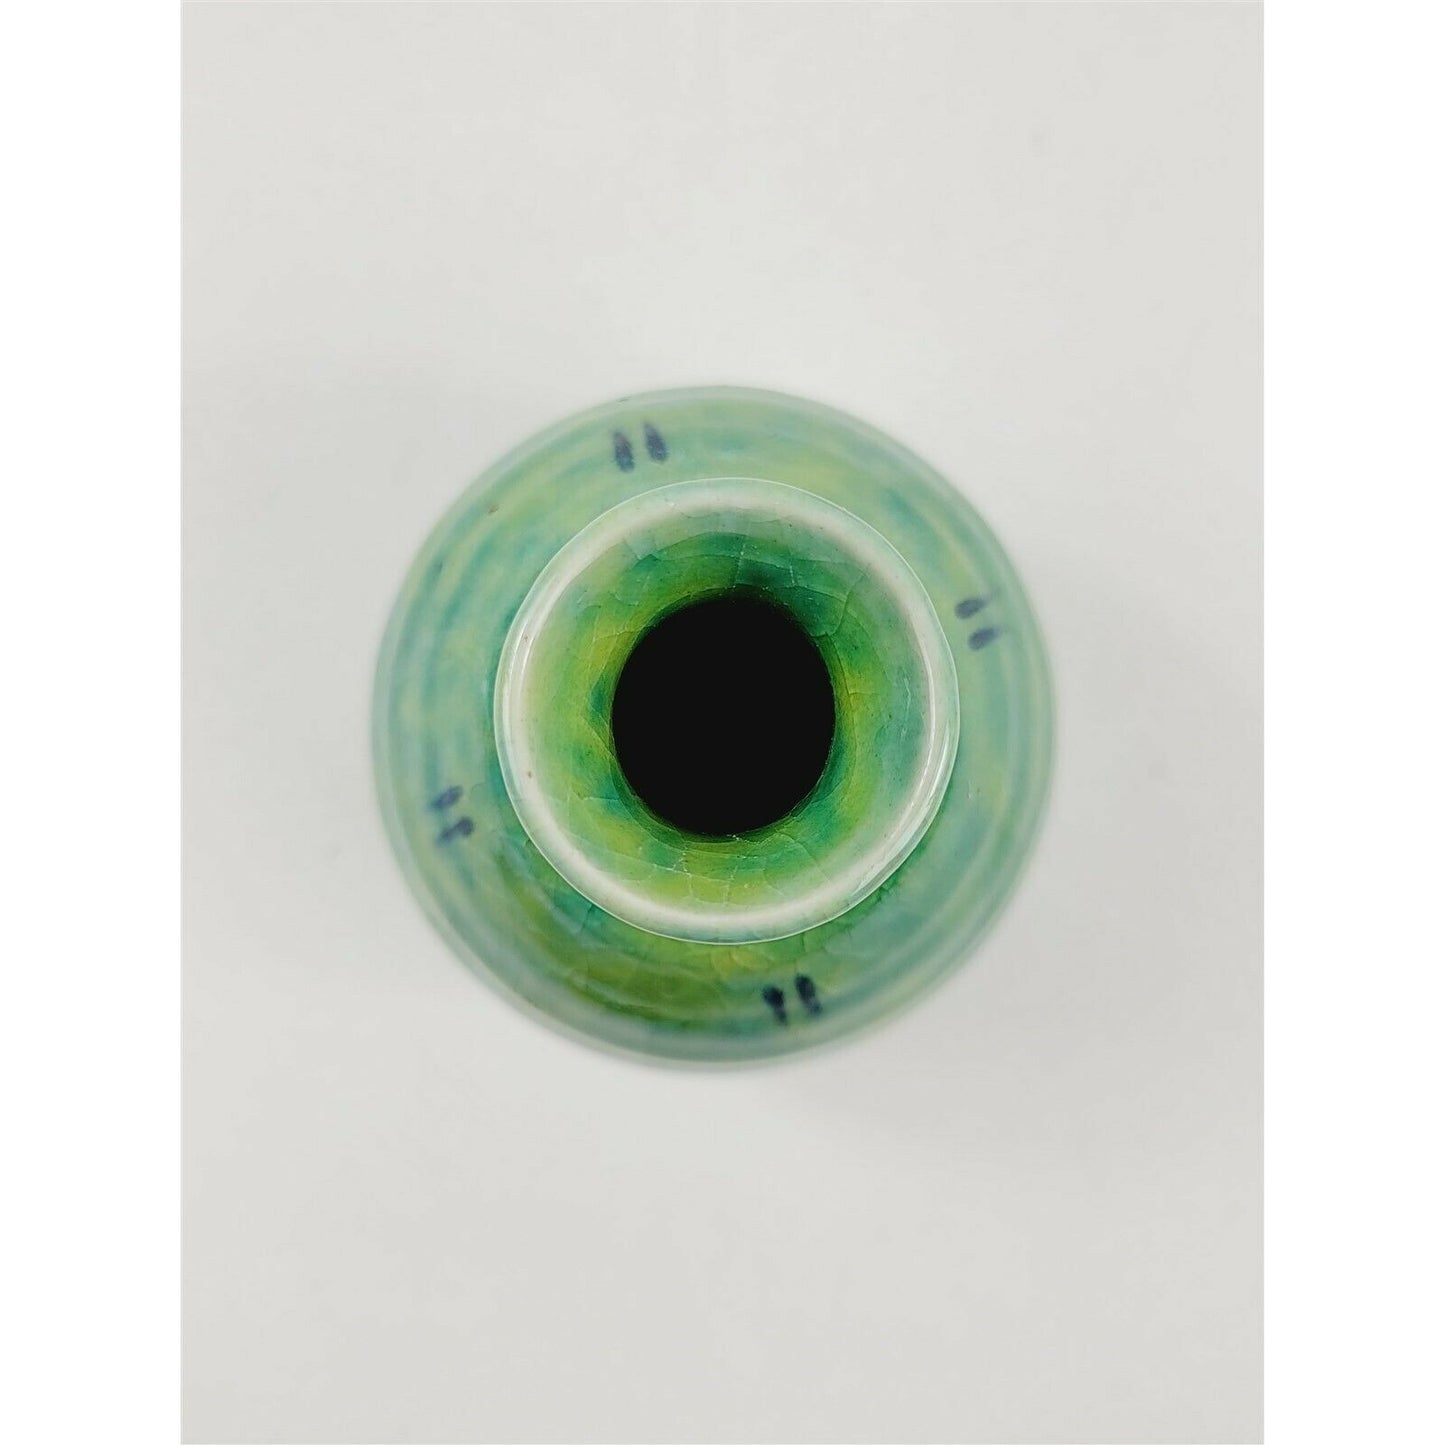 Set Vase & 2 Miniature Cups Handmade Ceramic Blue Green Dip Glazed